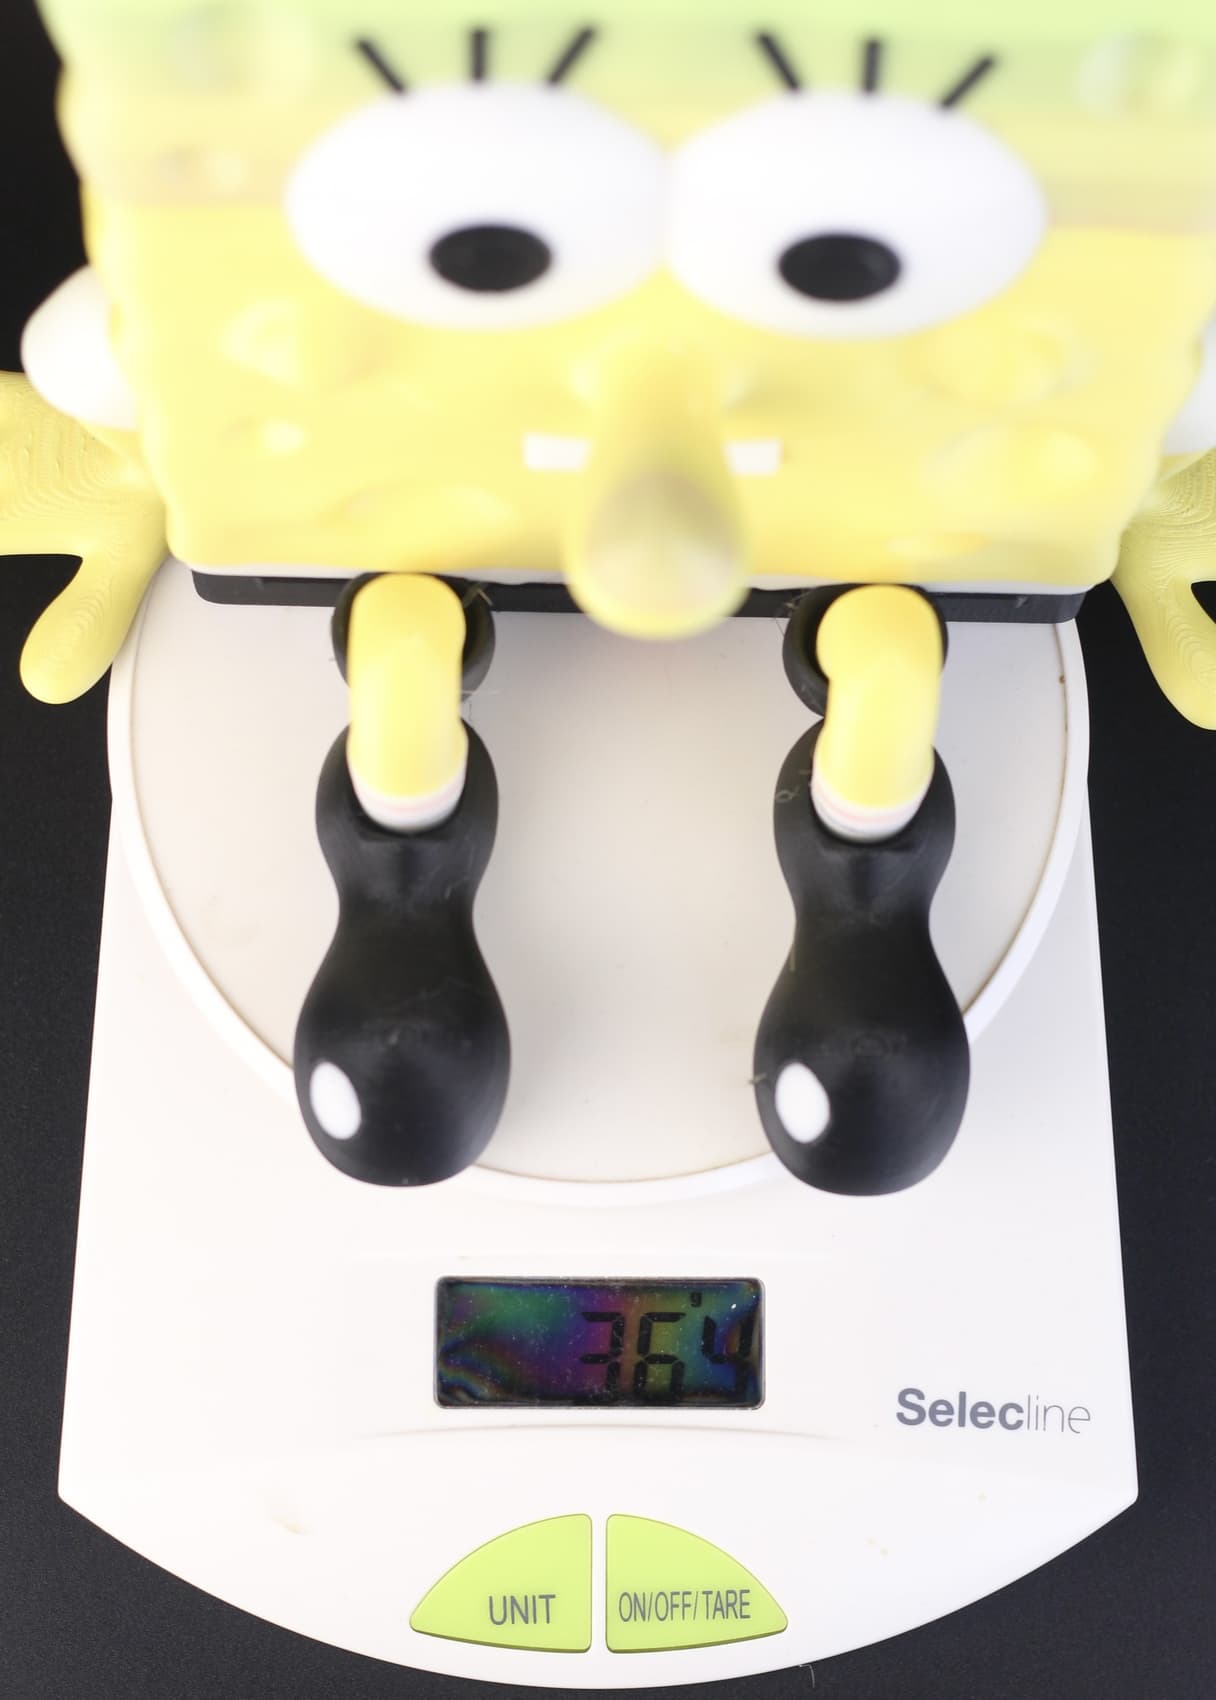 SpongeBob SquarePants on X1 Carbon from Bambu Lab10